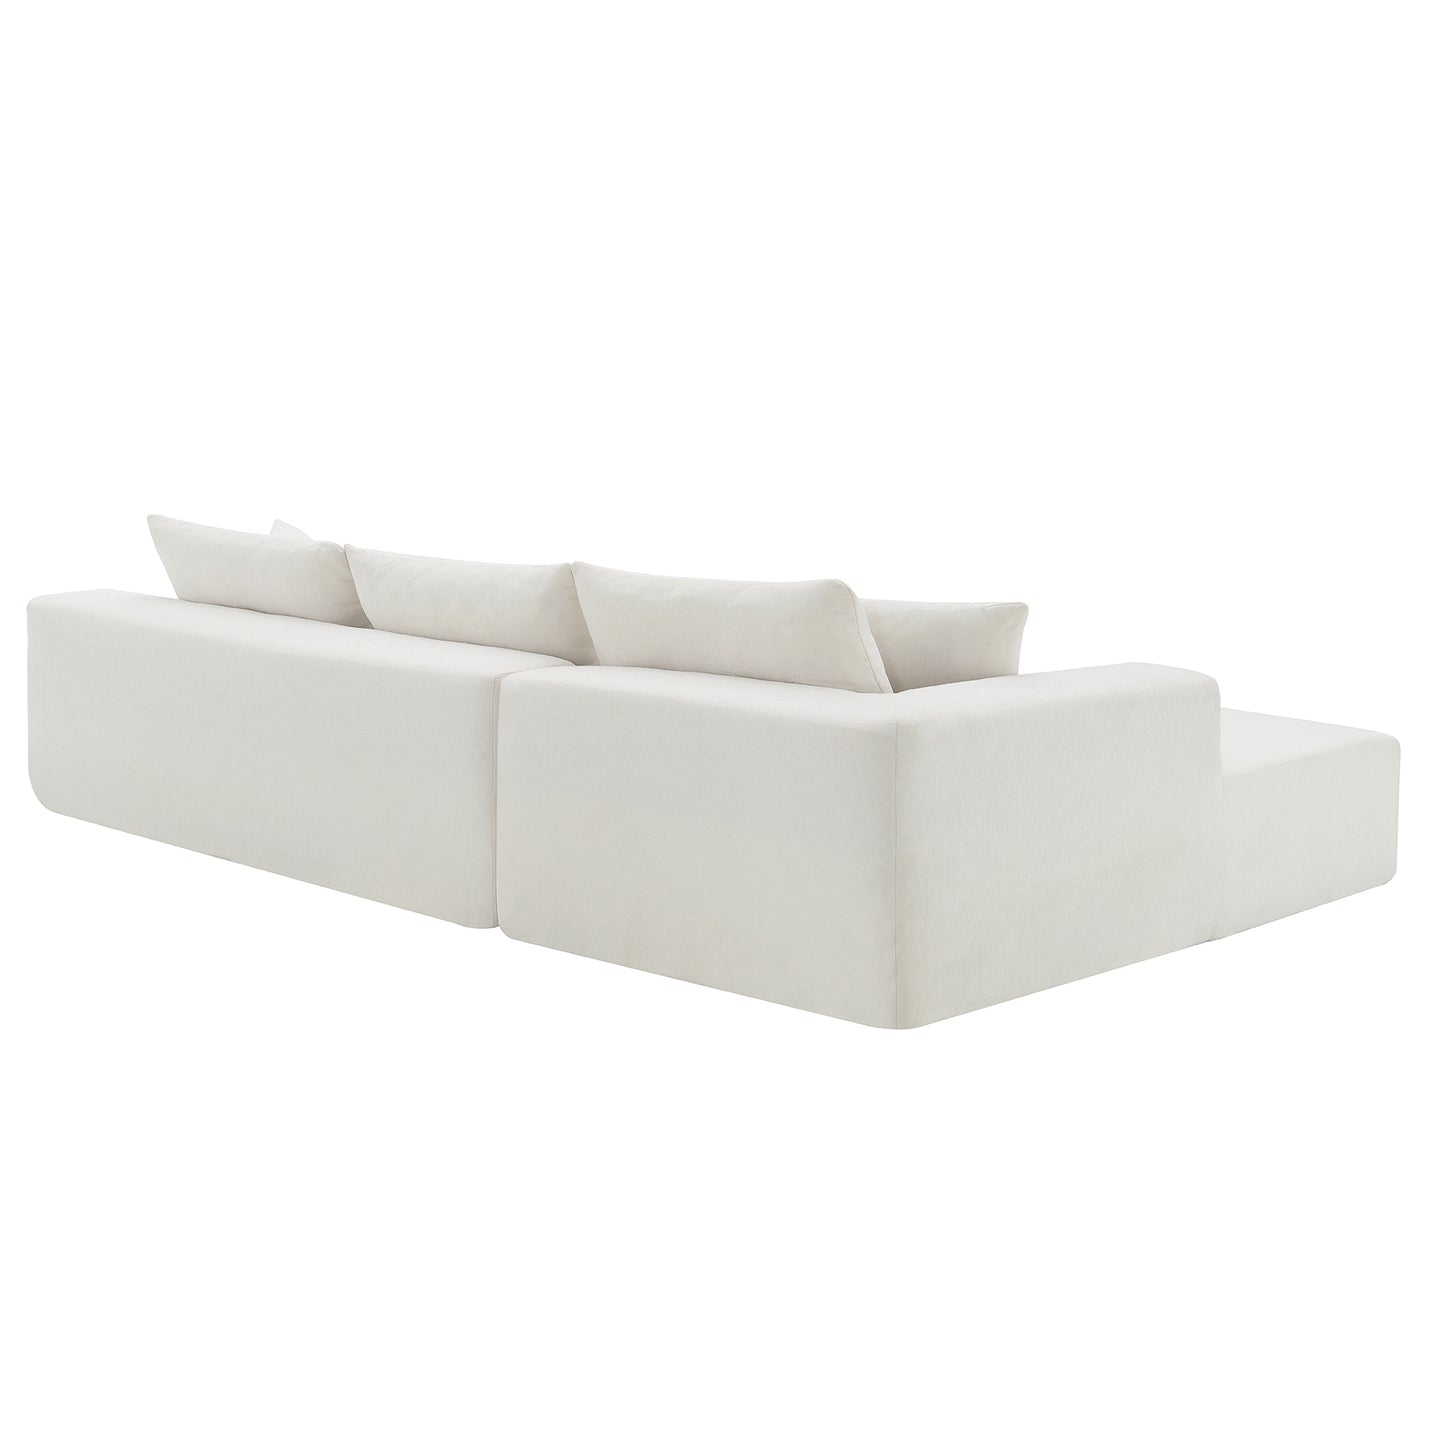 Chic White L-Shape Modular Sectional Sleeper Sofa Set